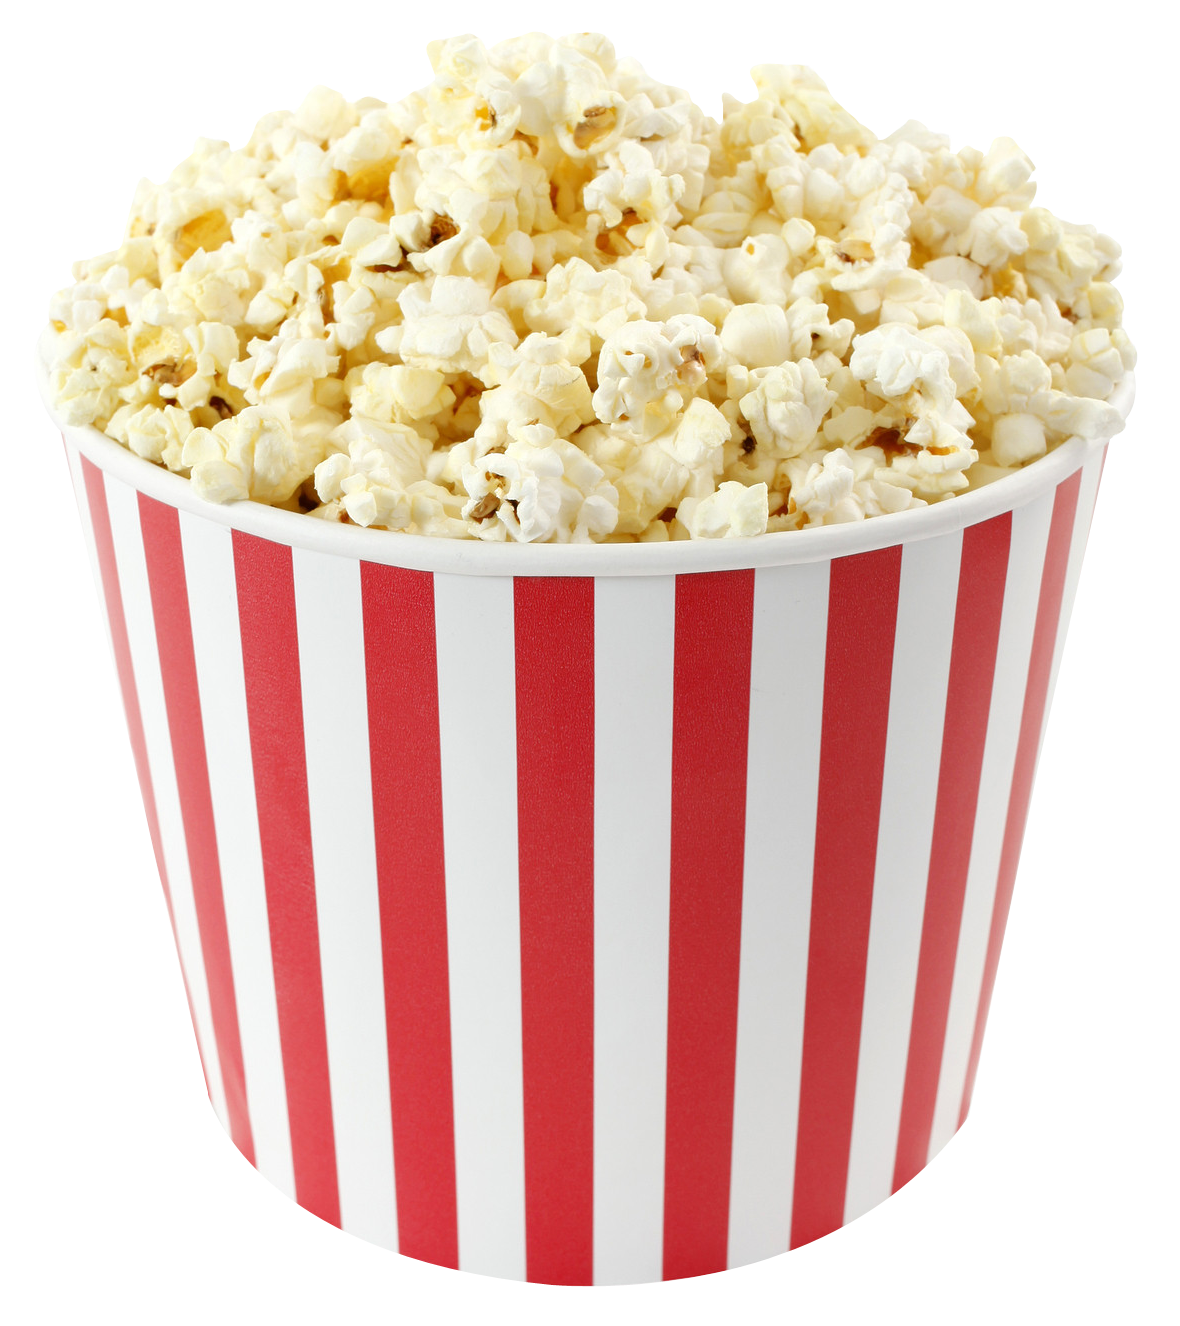 A Bucket Of Popcorn On A Black Background